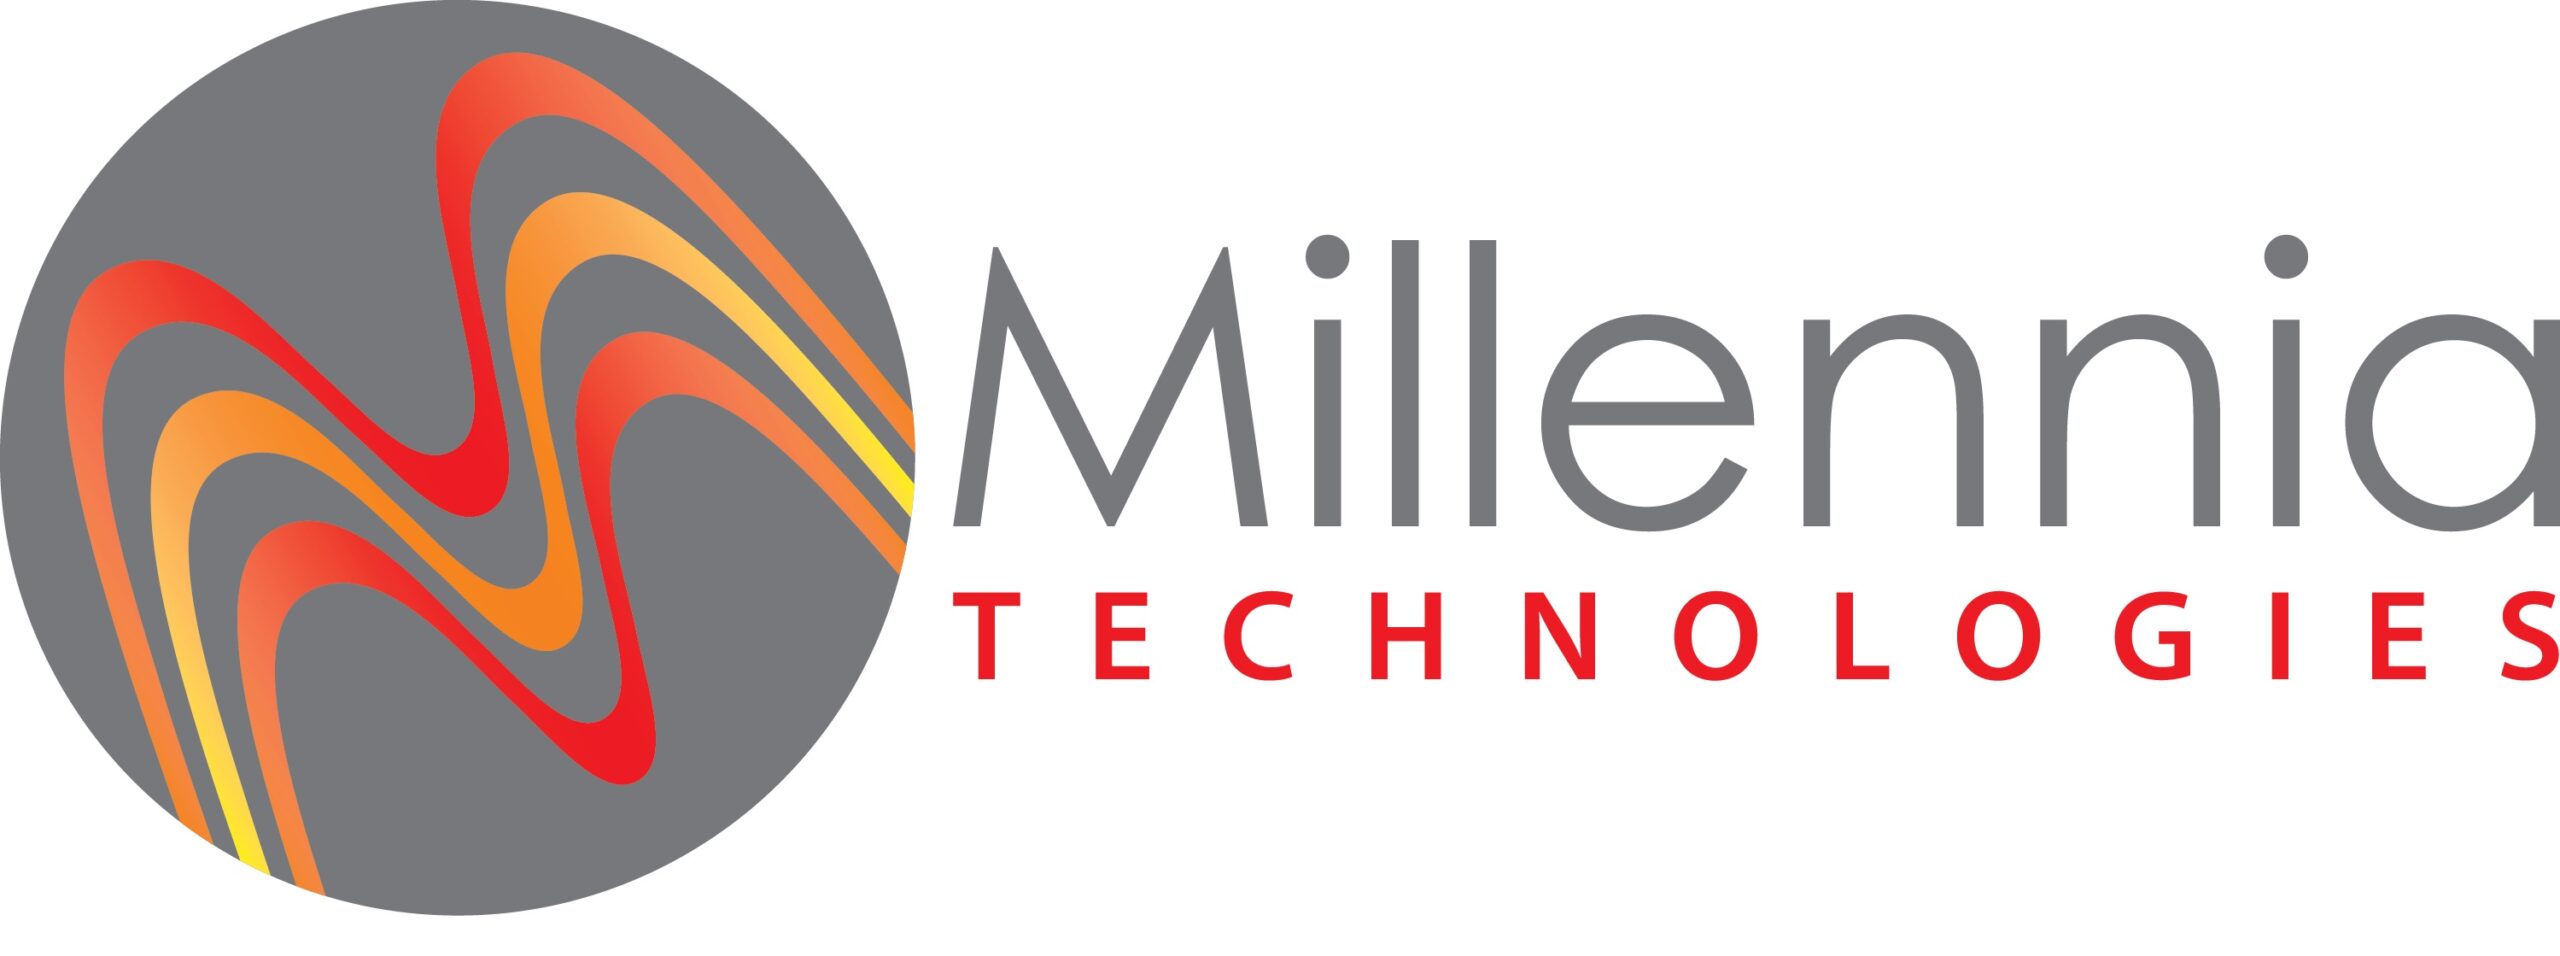 Millennia Technologies Logo